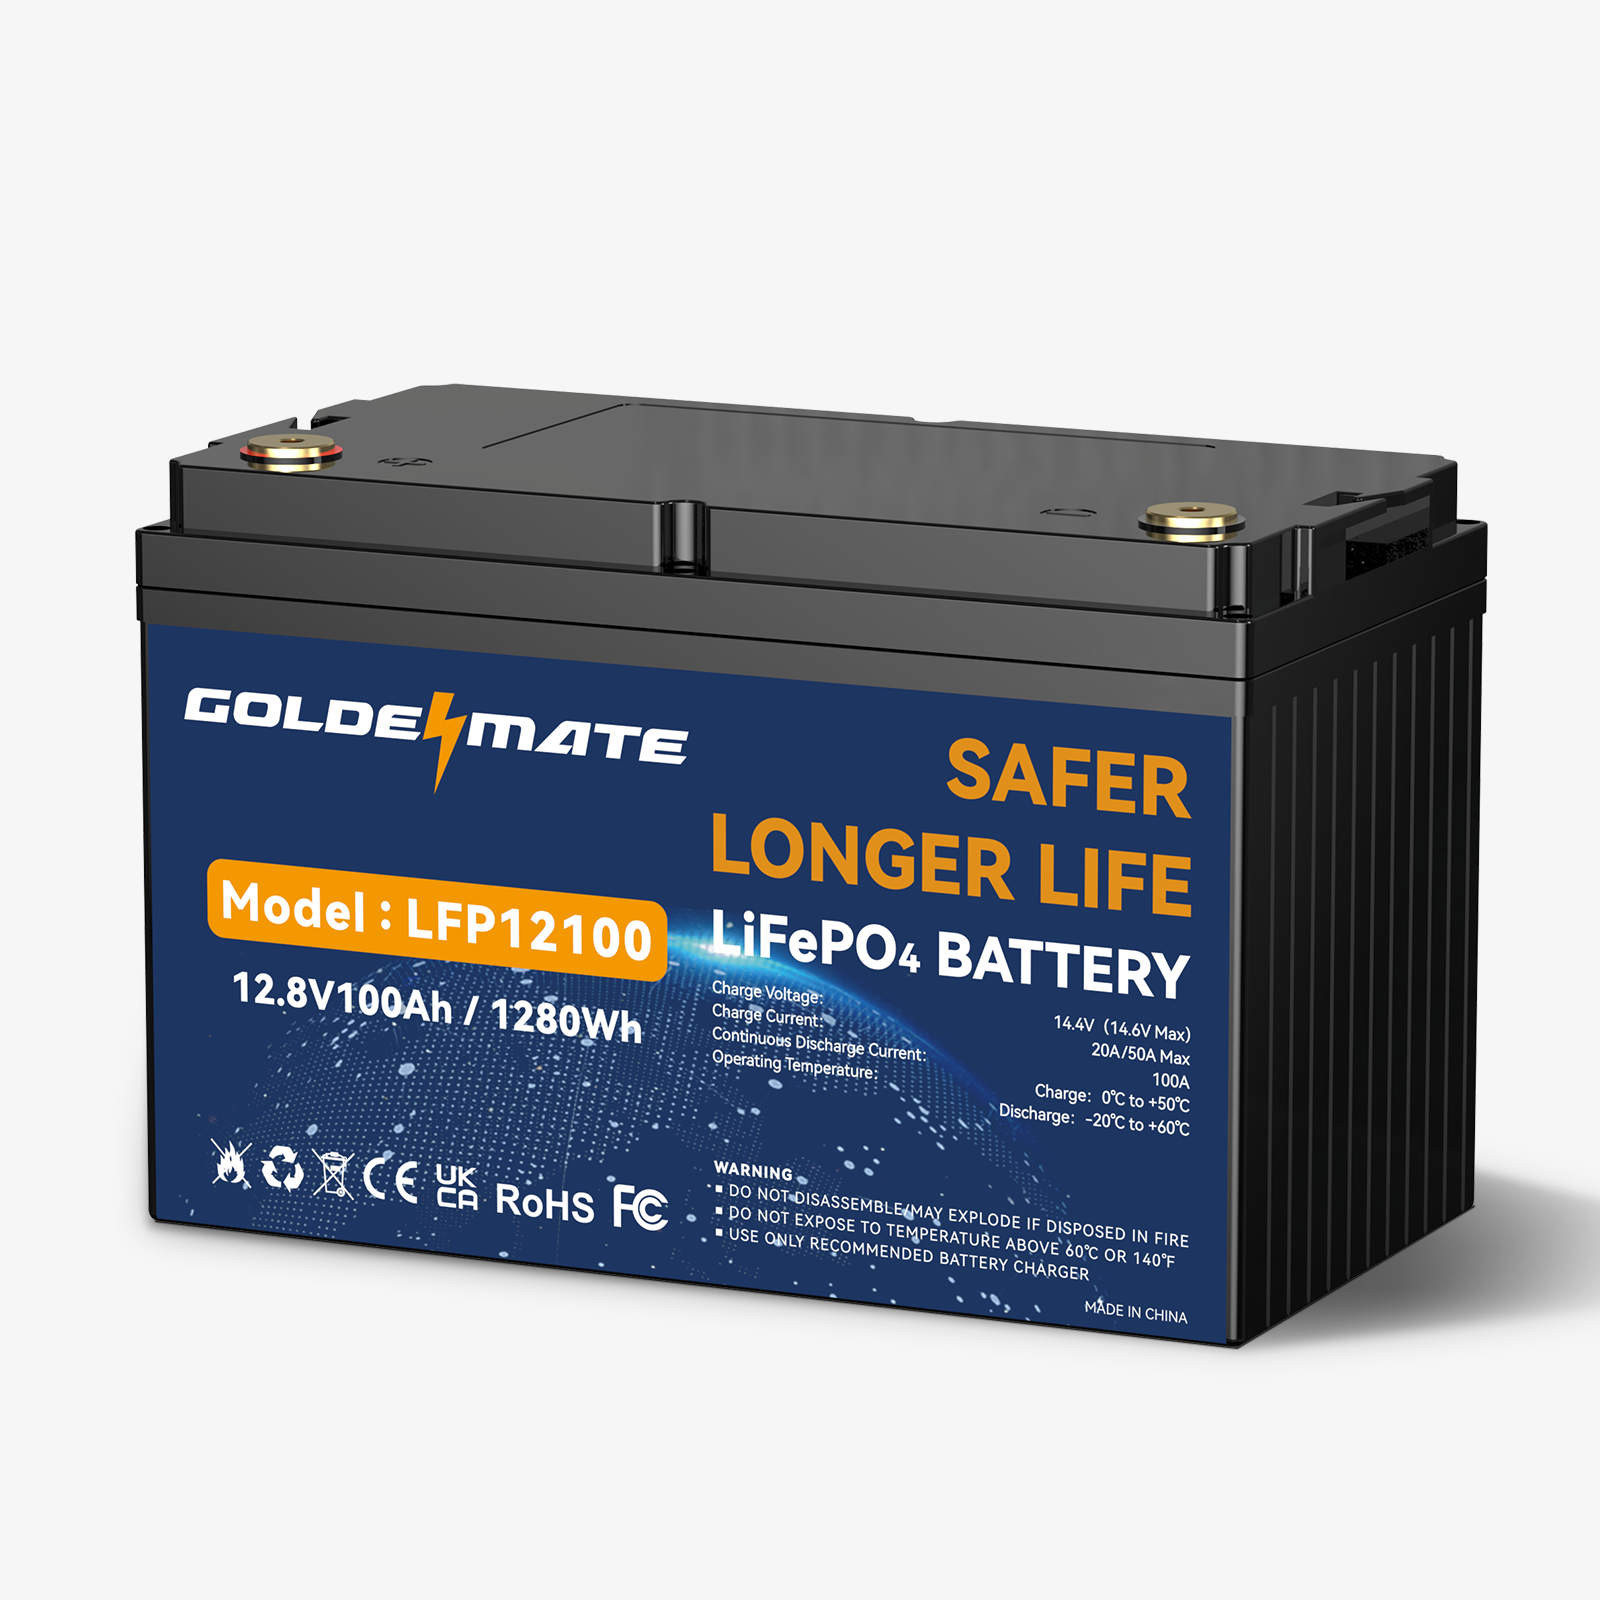 GoldenMate 12V 100Ah Group 31 LiFePO4 Lithium Battery, 1280Wh Energy, Built-In BMS